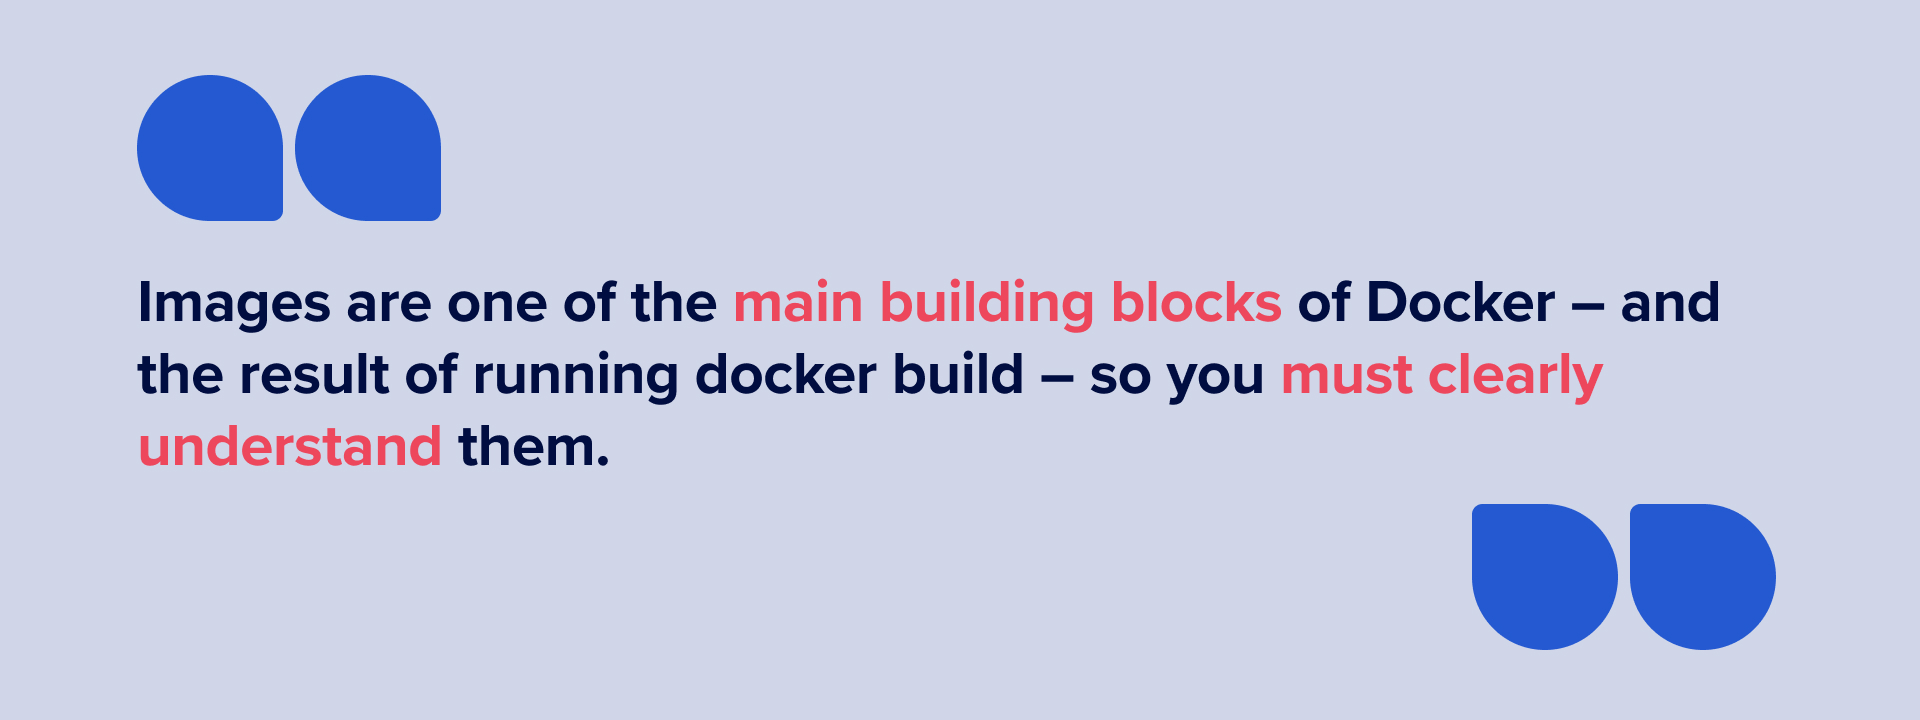 Docker build image